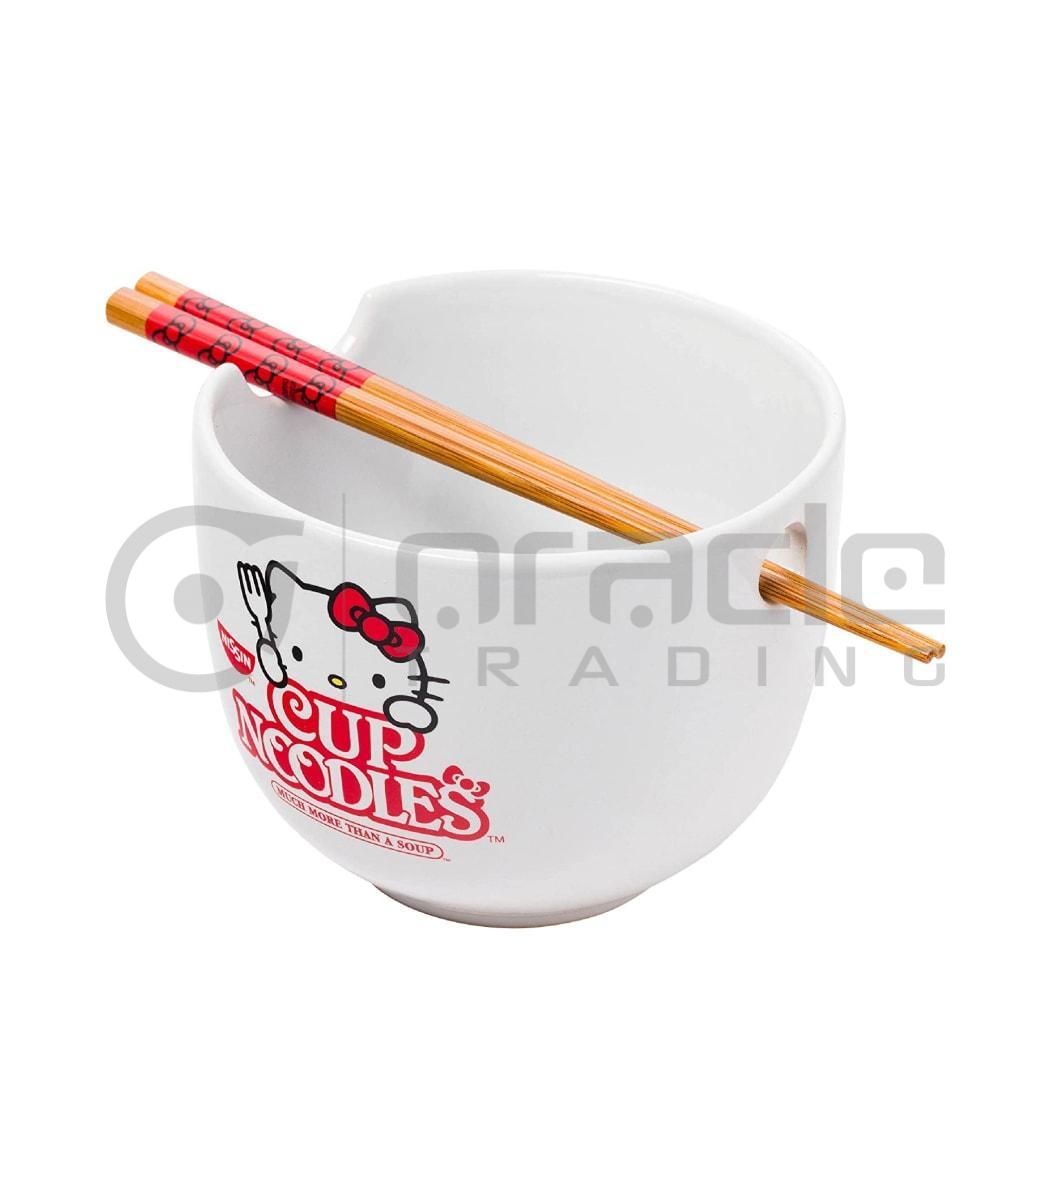 ramen bowl hello kitty cup noodles rbc007 b